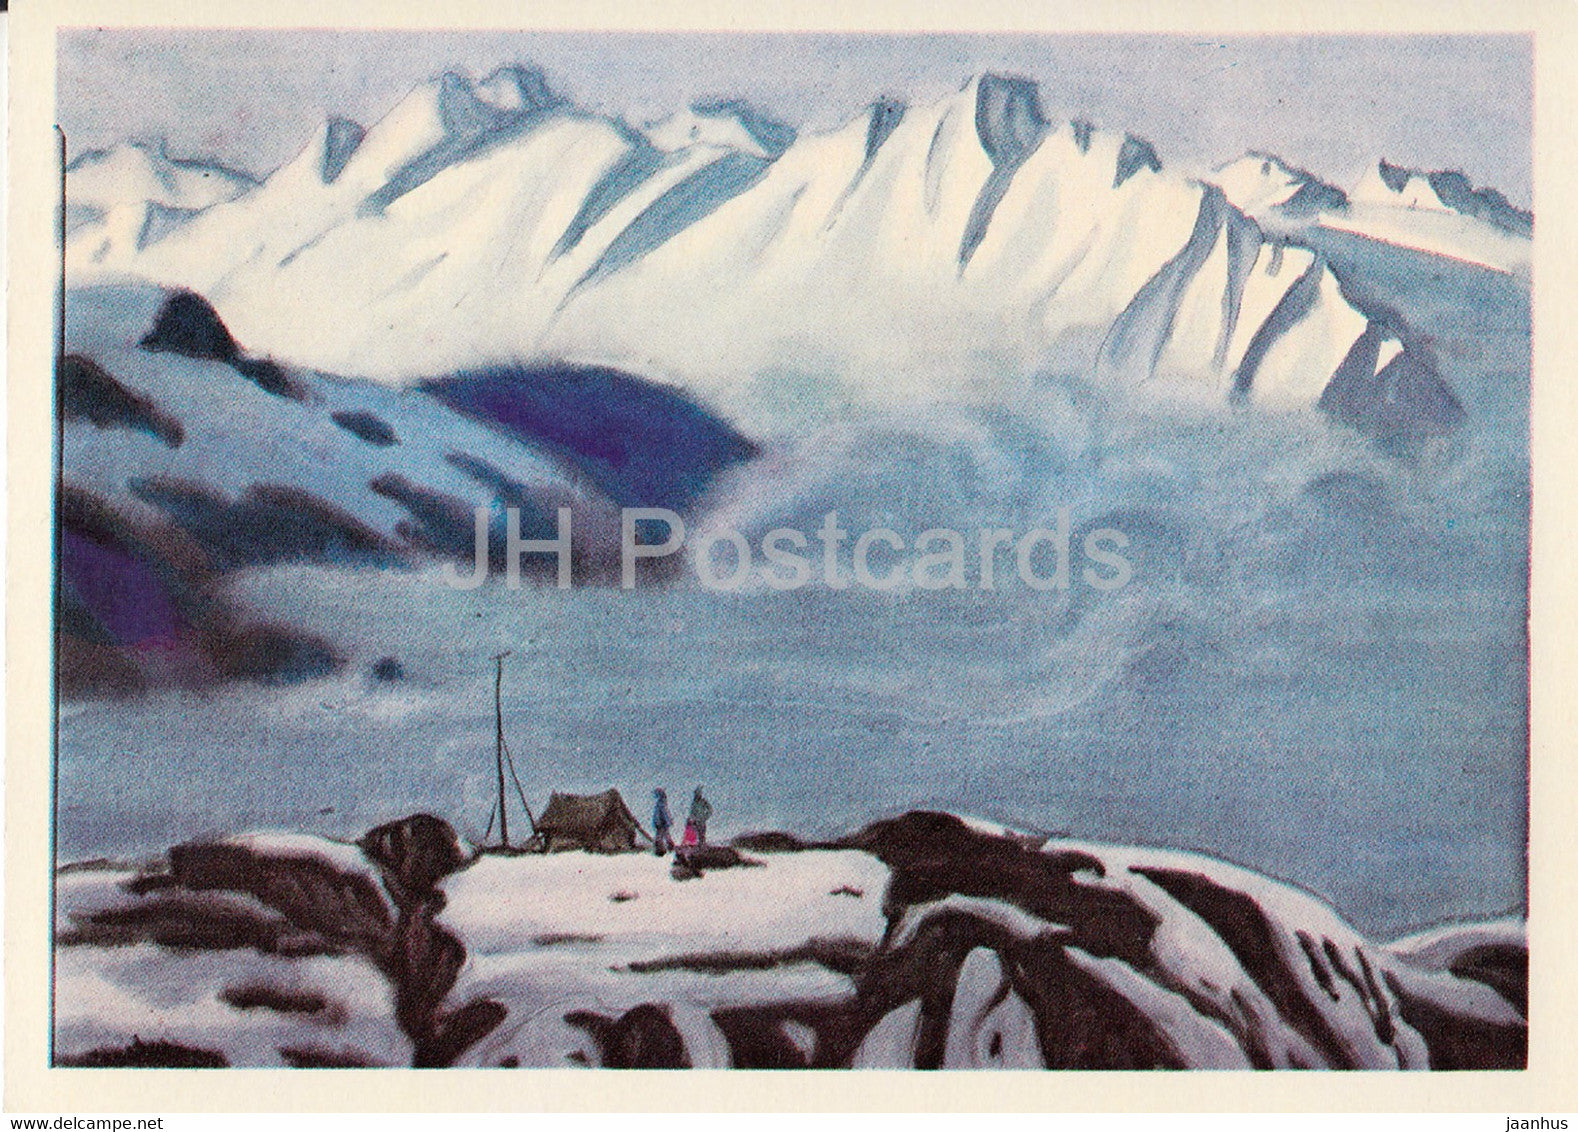 across Kyrgyzstan by V. Rogachev - Glaciologists - illustration - 1979 - Russia USSR - unused - JH Postcards